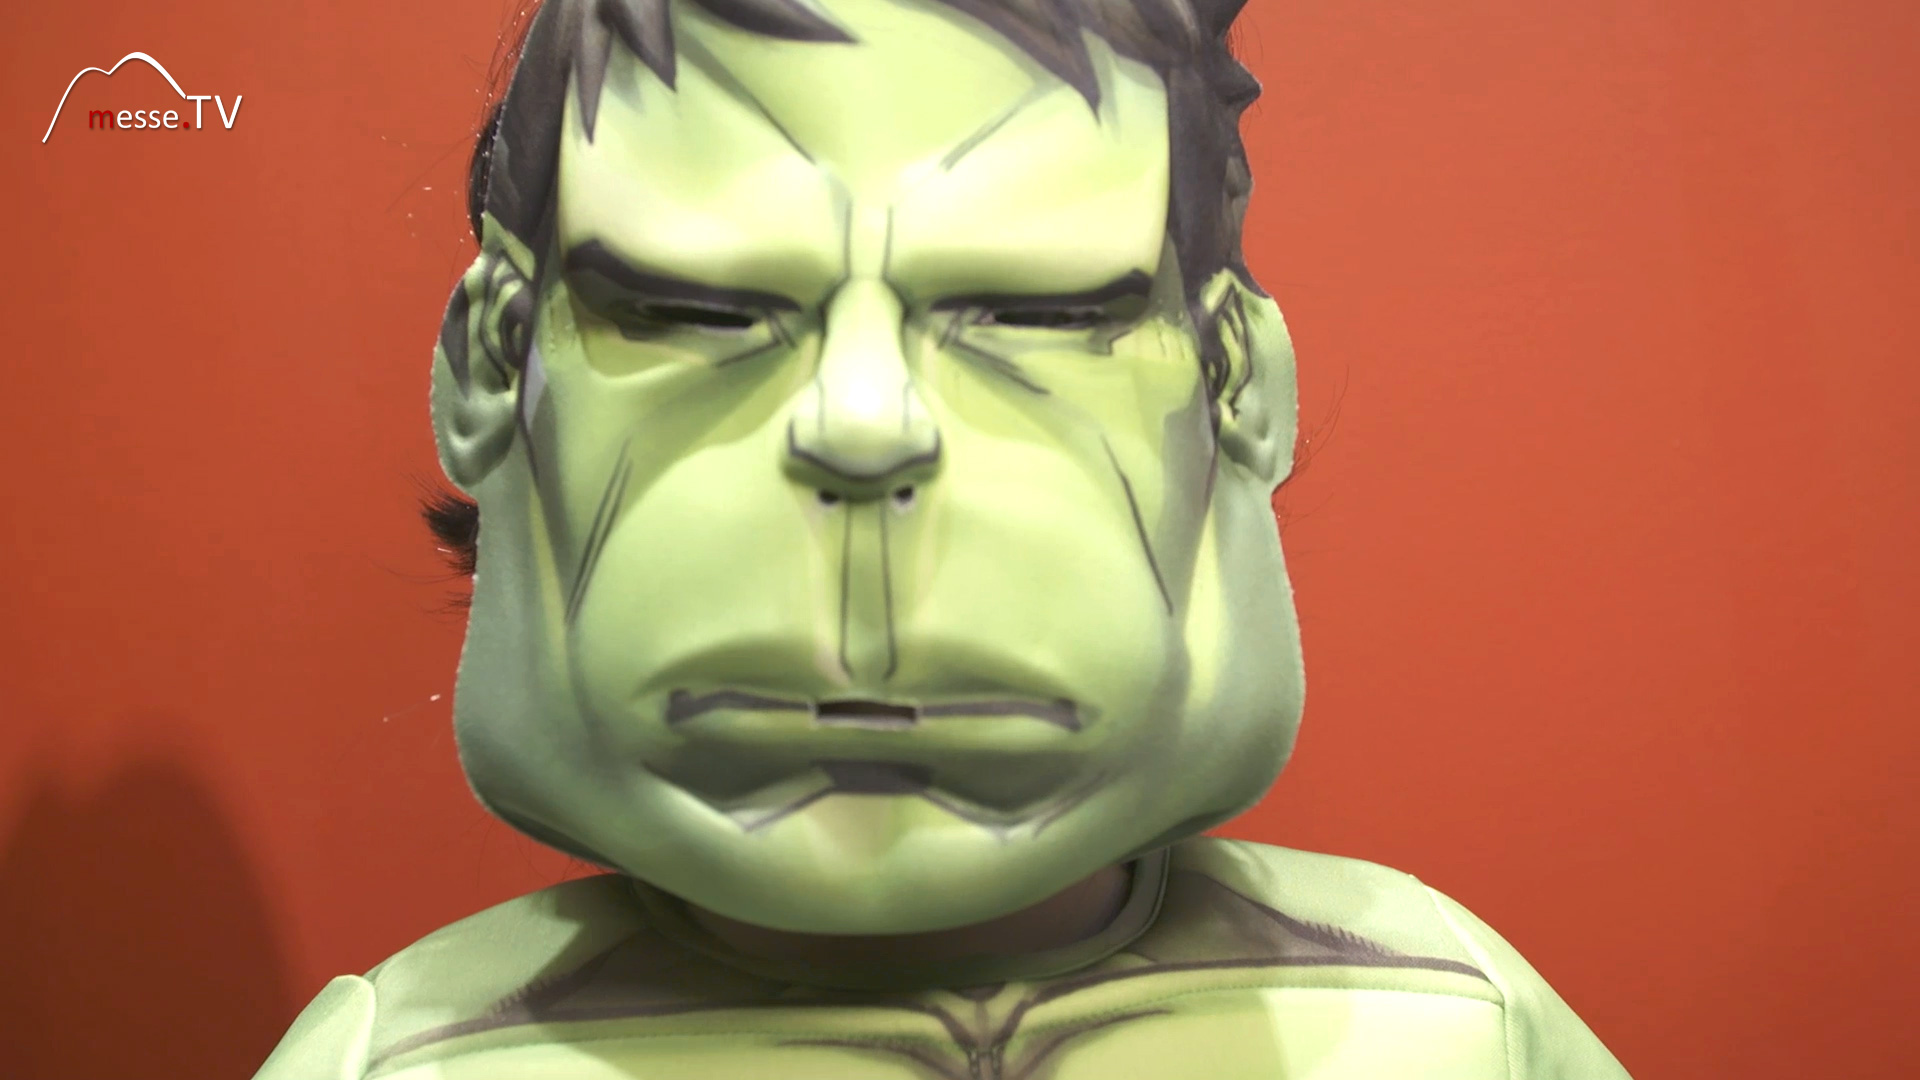 Rubies Hulk costume